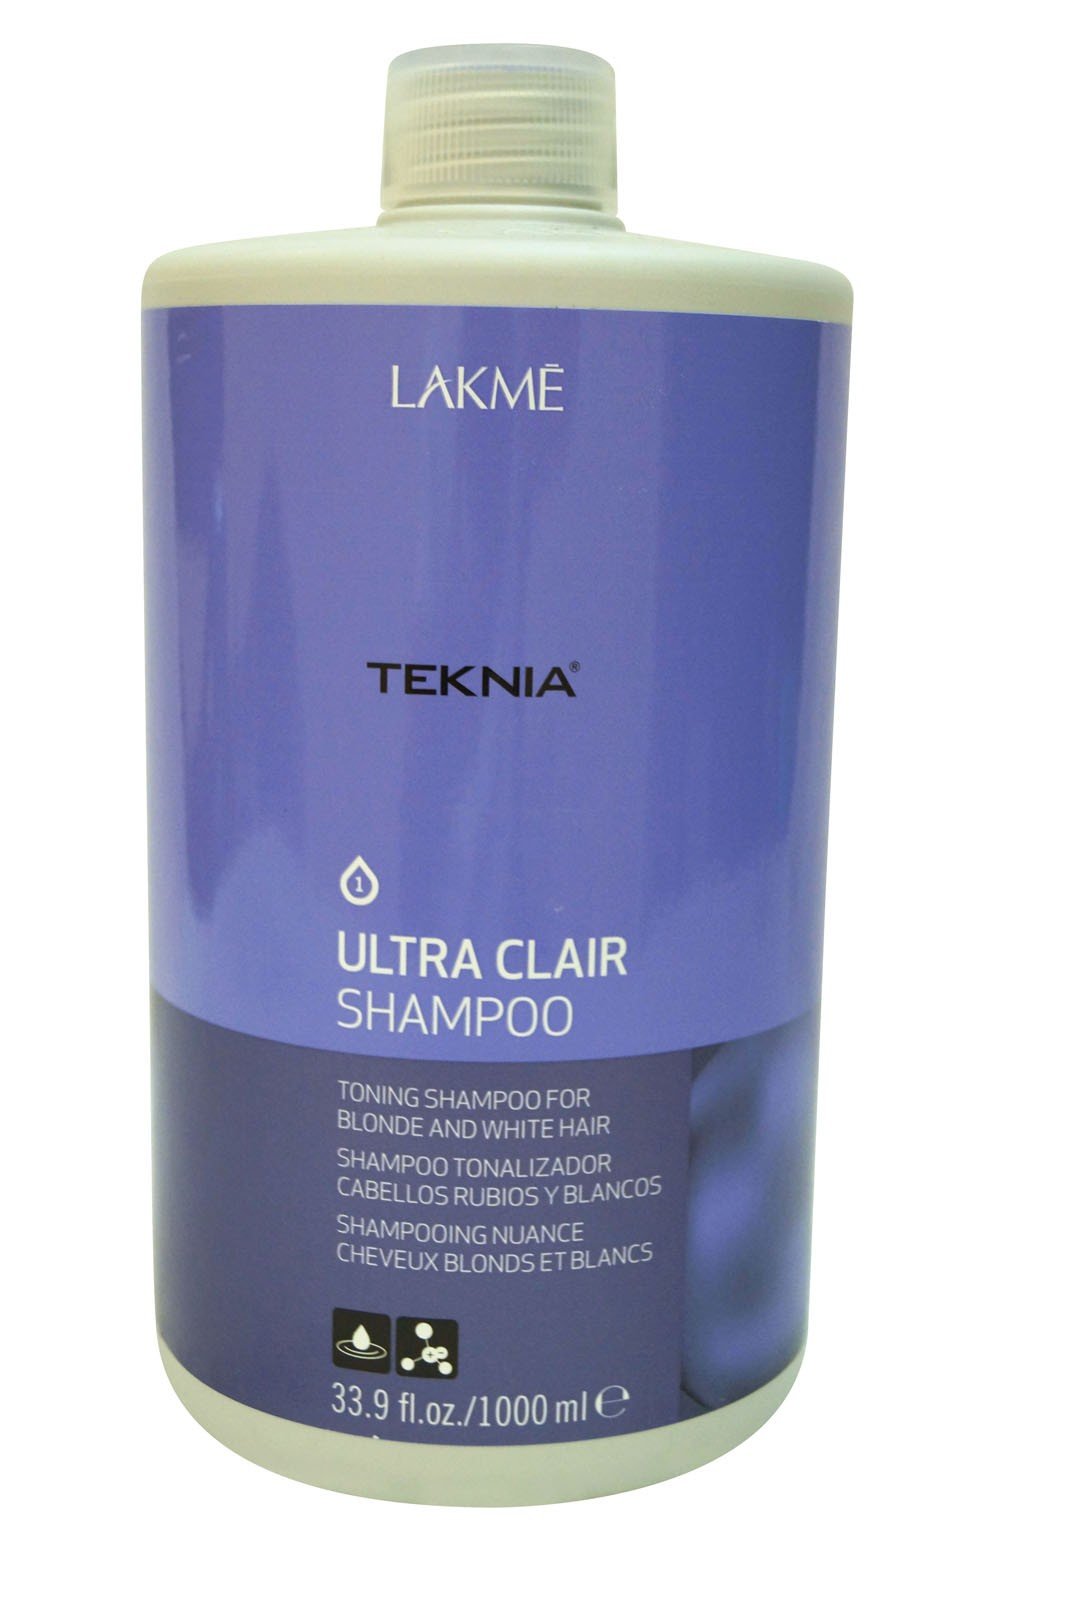 Lakme Ultra Clair Shampoo